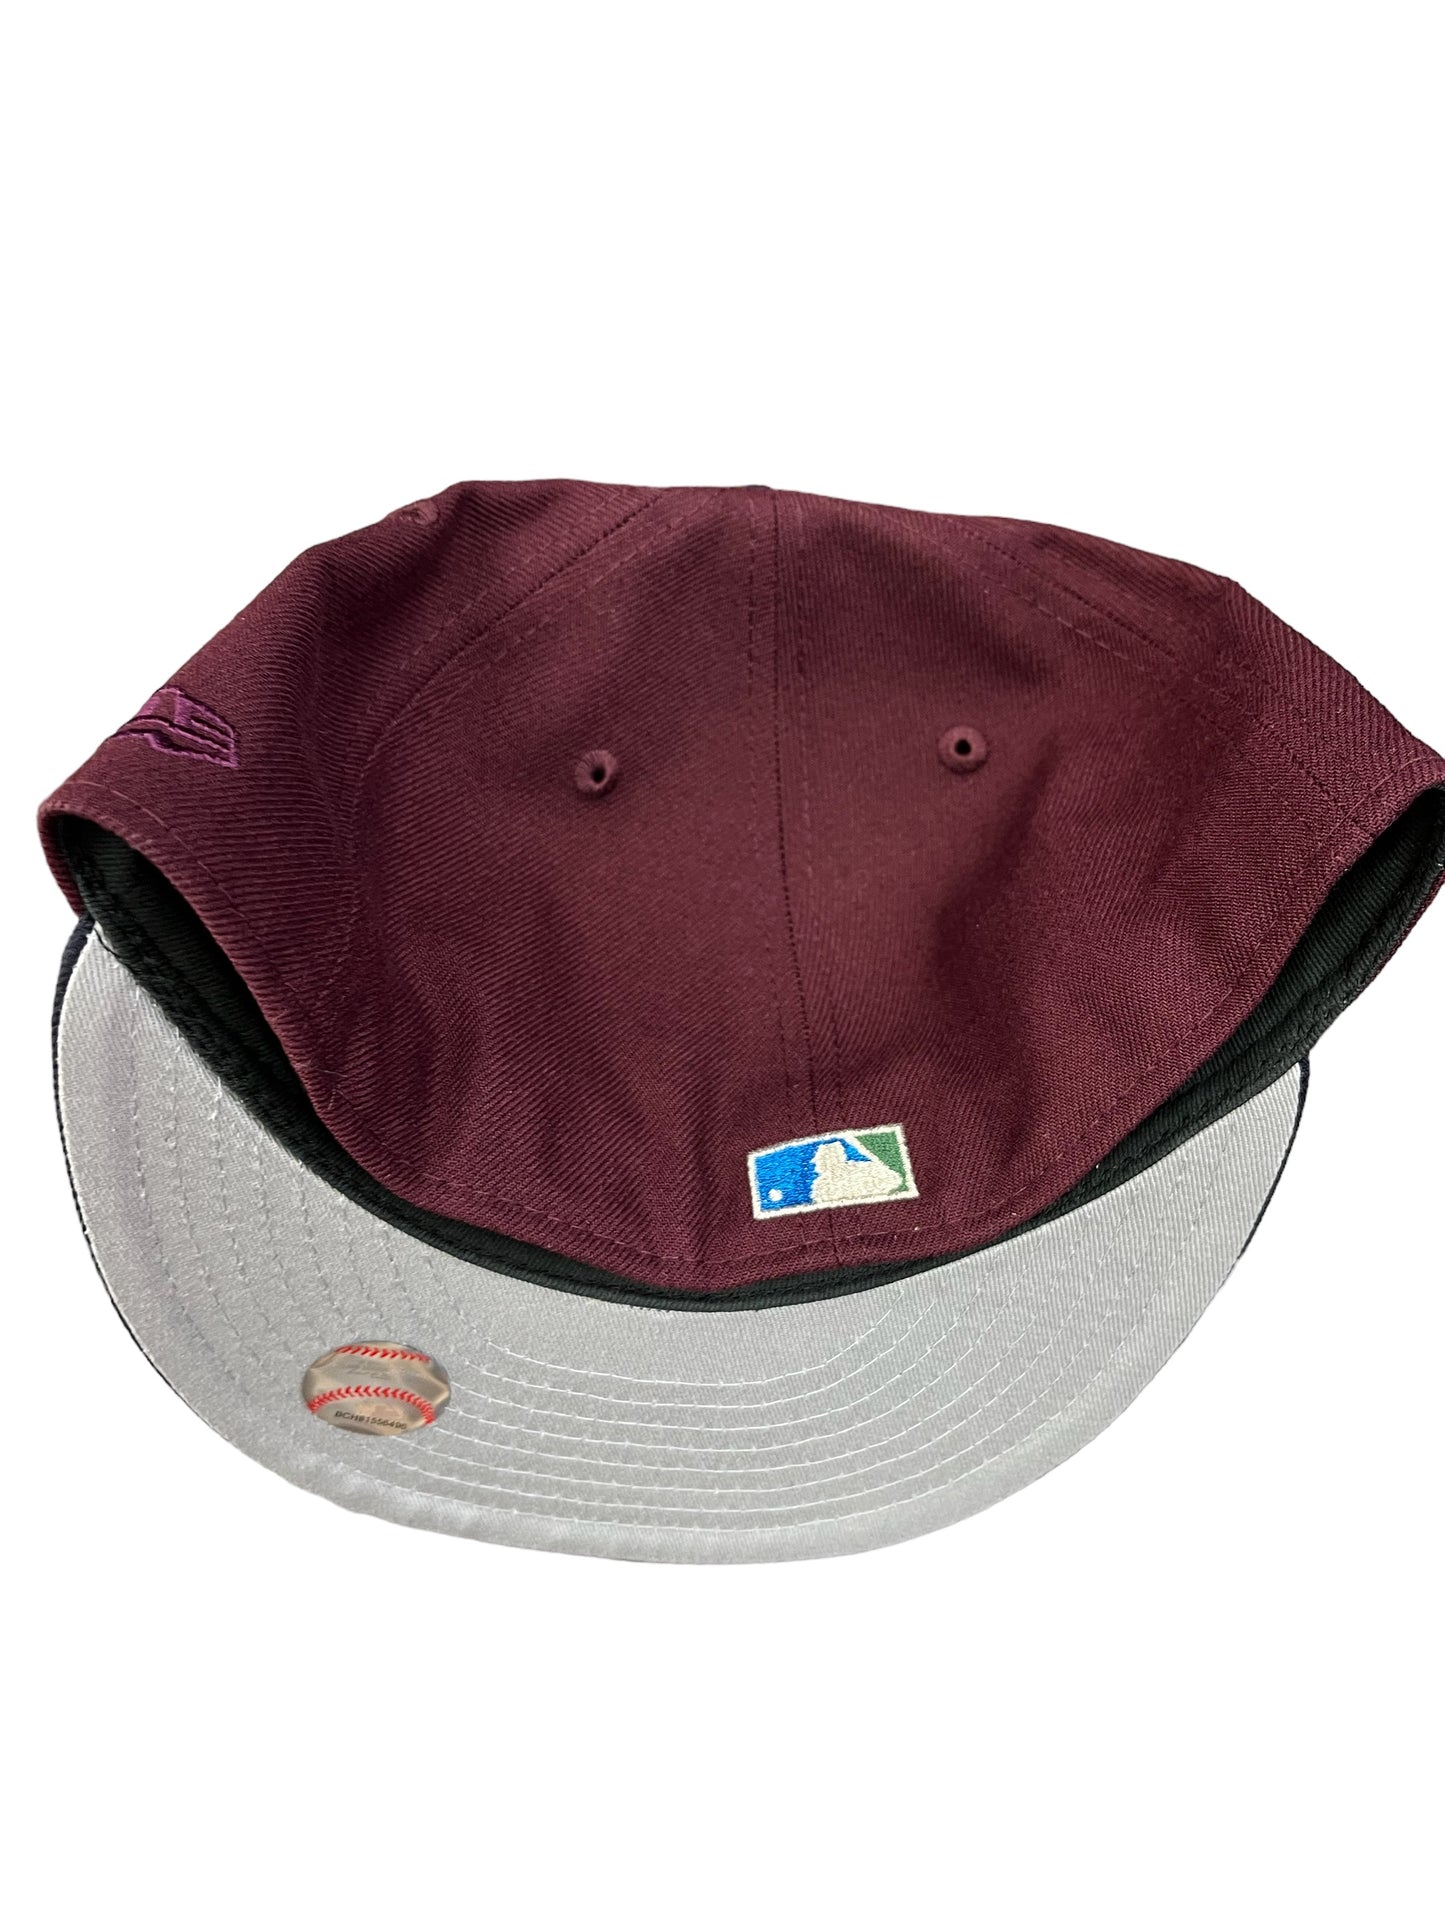 Houston Astros “Maroon / Navy” Hat